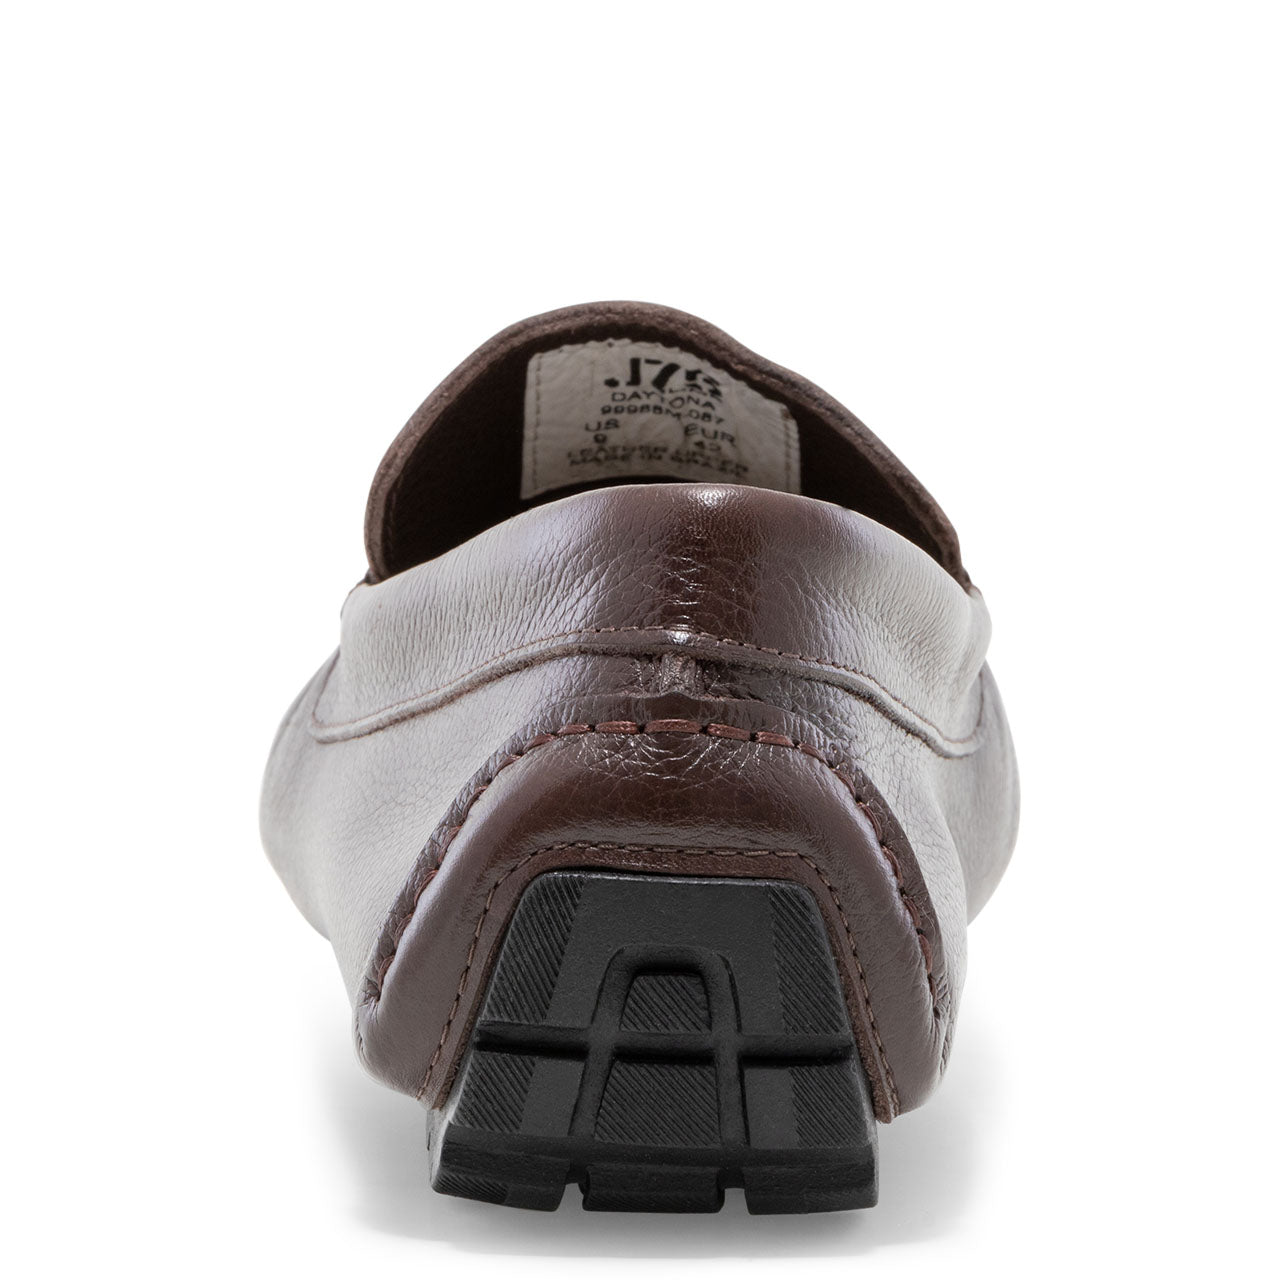 Daytona - Brown Dress Loafers for Men by J75 2